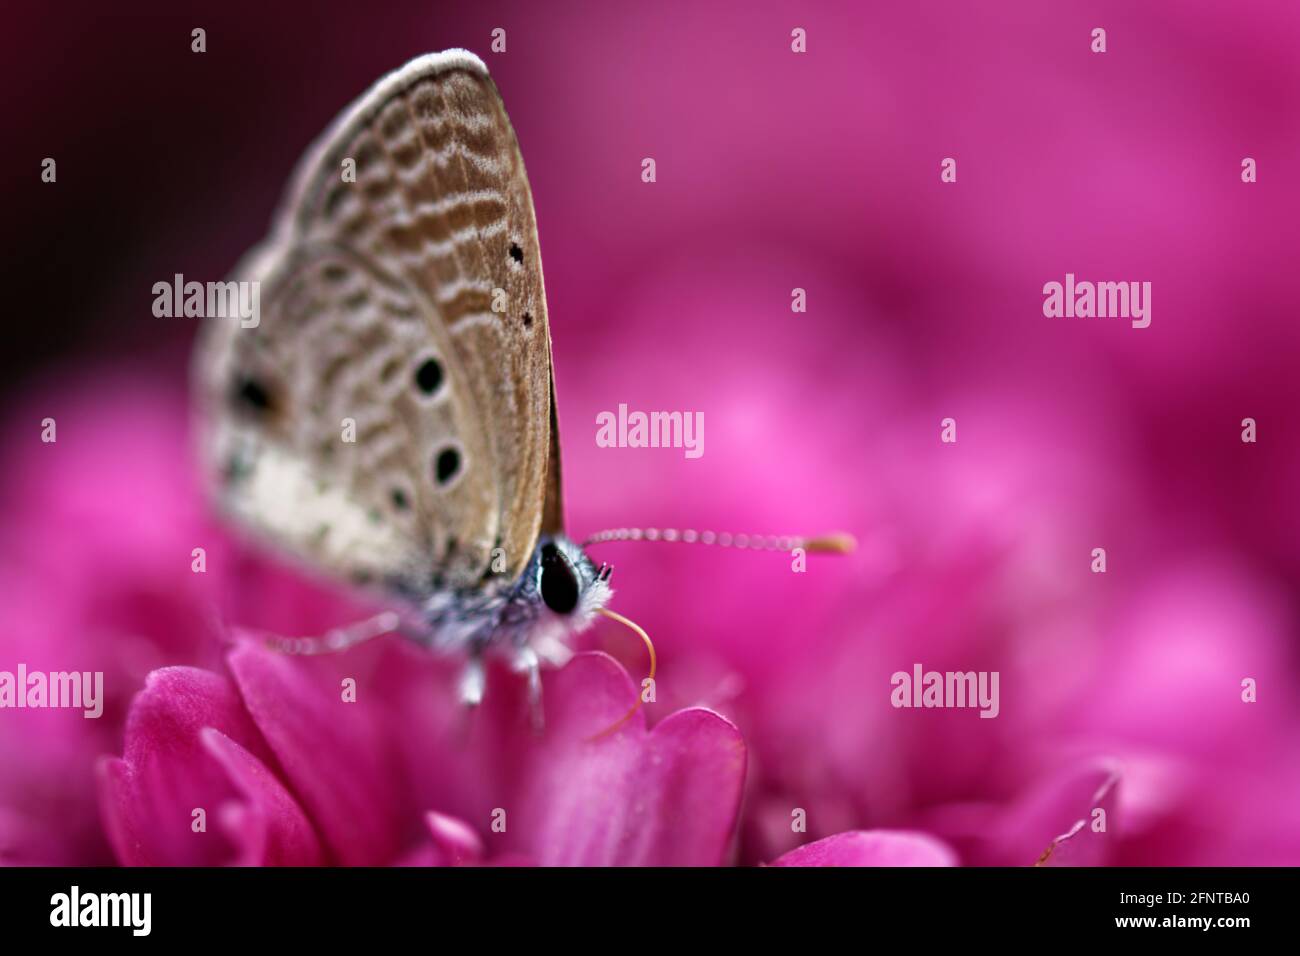 Gossamer-winged butterflies on flower freedom life Stock Photo